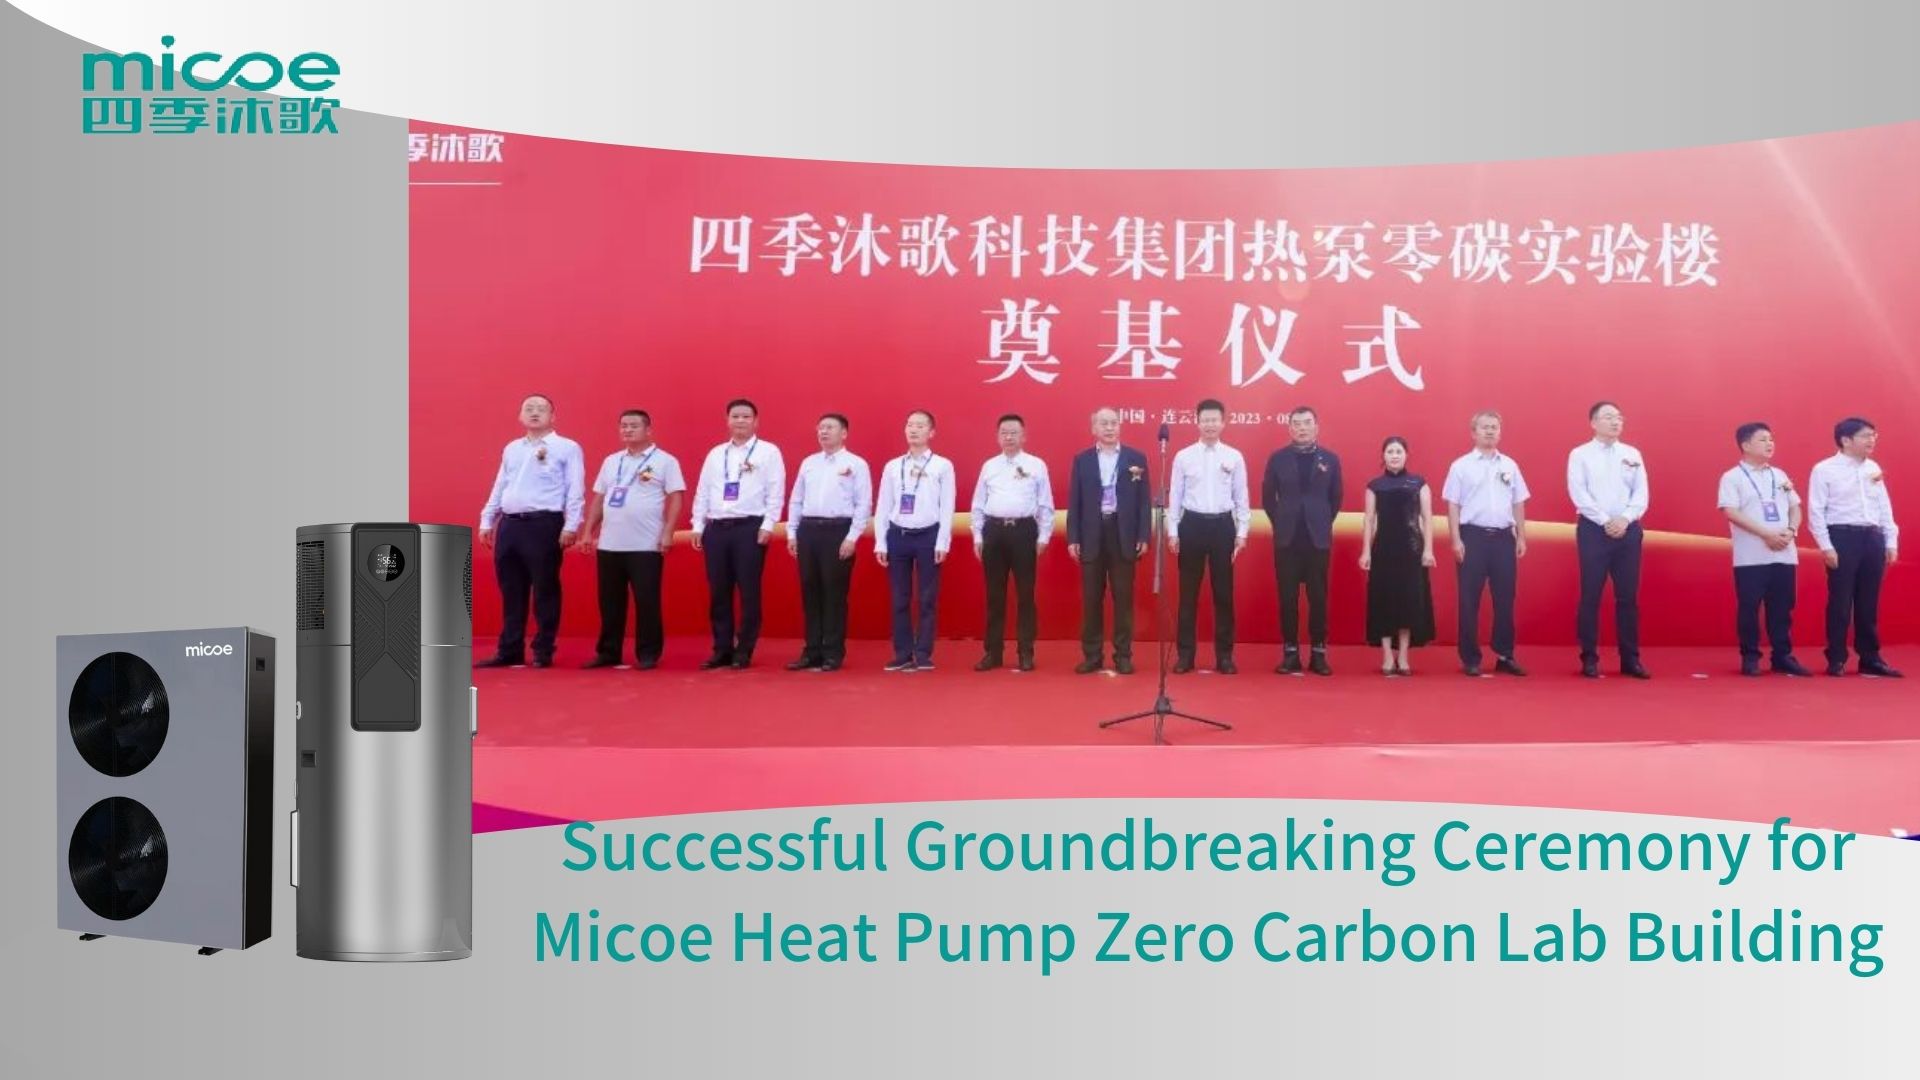 Micoe Heat Pump Zero Carbon Lab Building을위한 성공적인 획기적인 행사